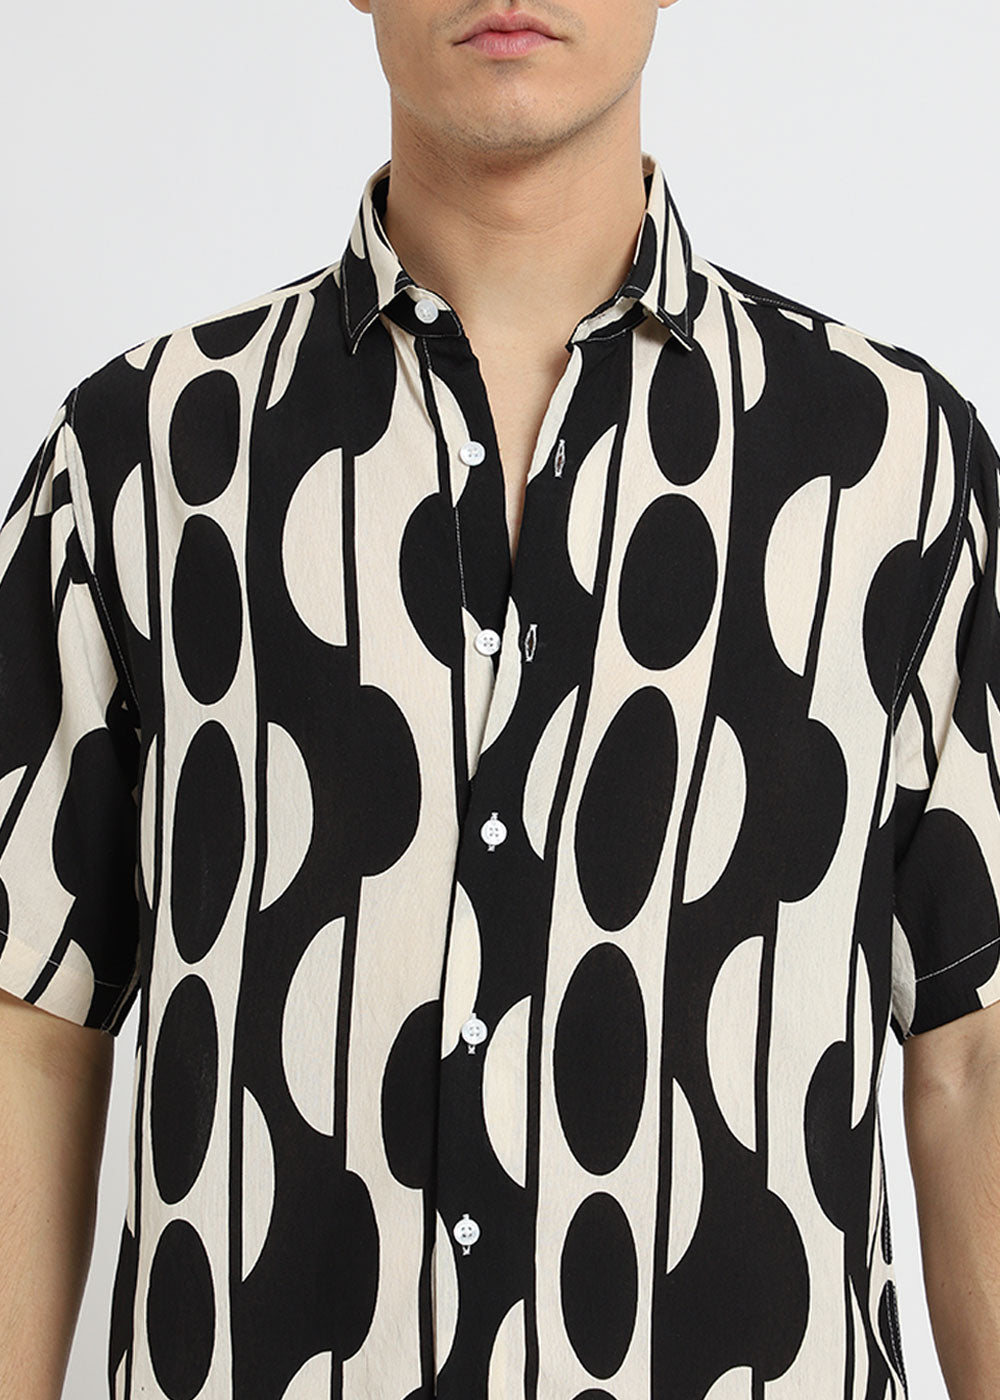 Black Geometric Printed Shirt